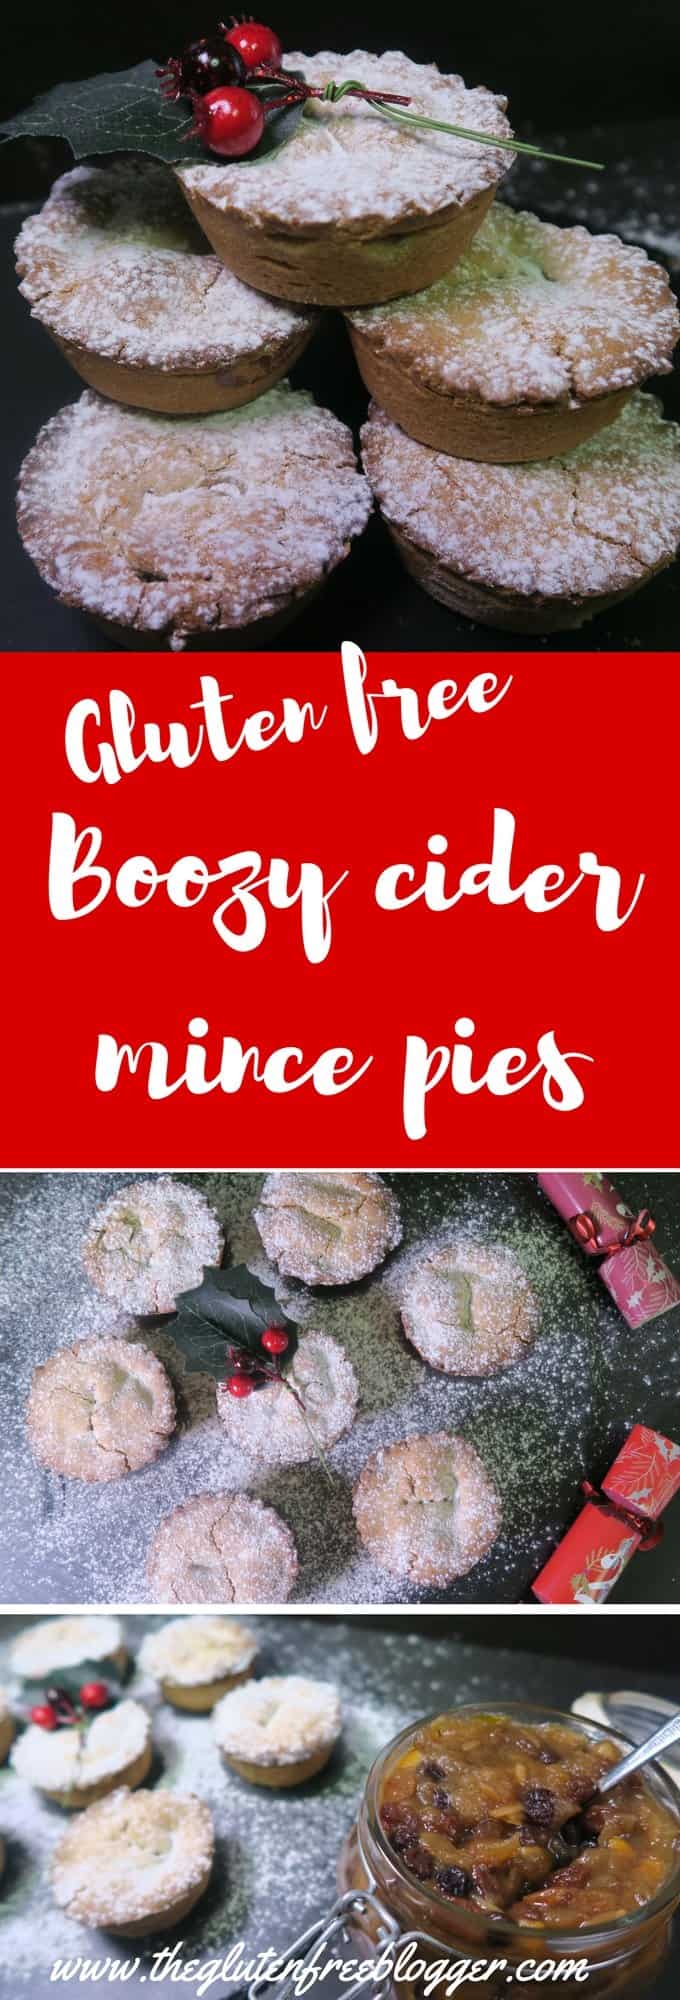 Gluten free mince pies recipe - www.theglutenfreeblogger.com